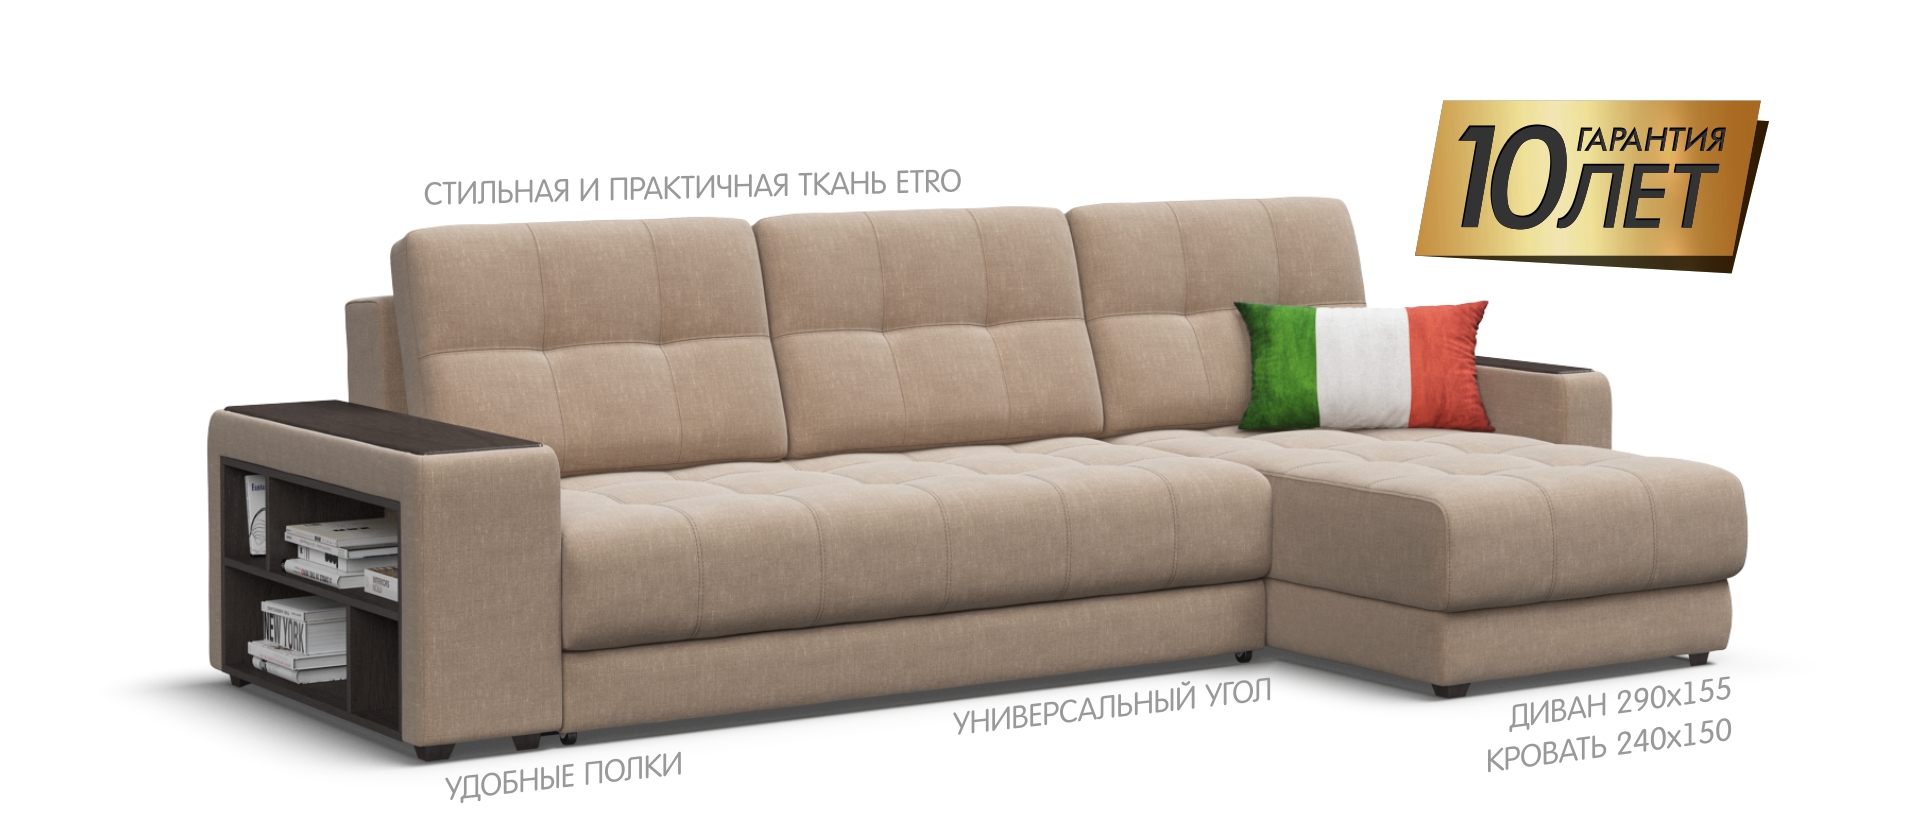 Милан 2п диван